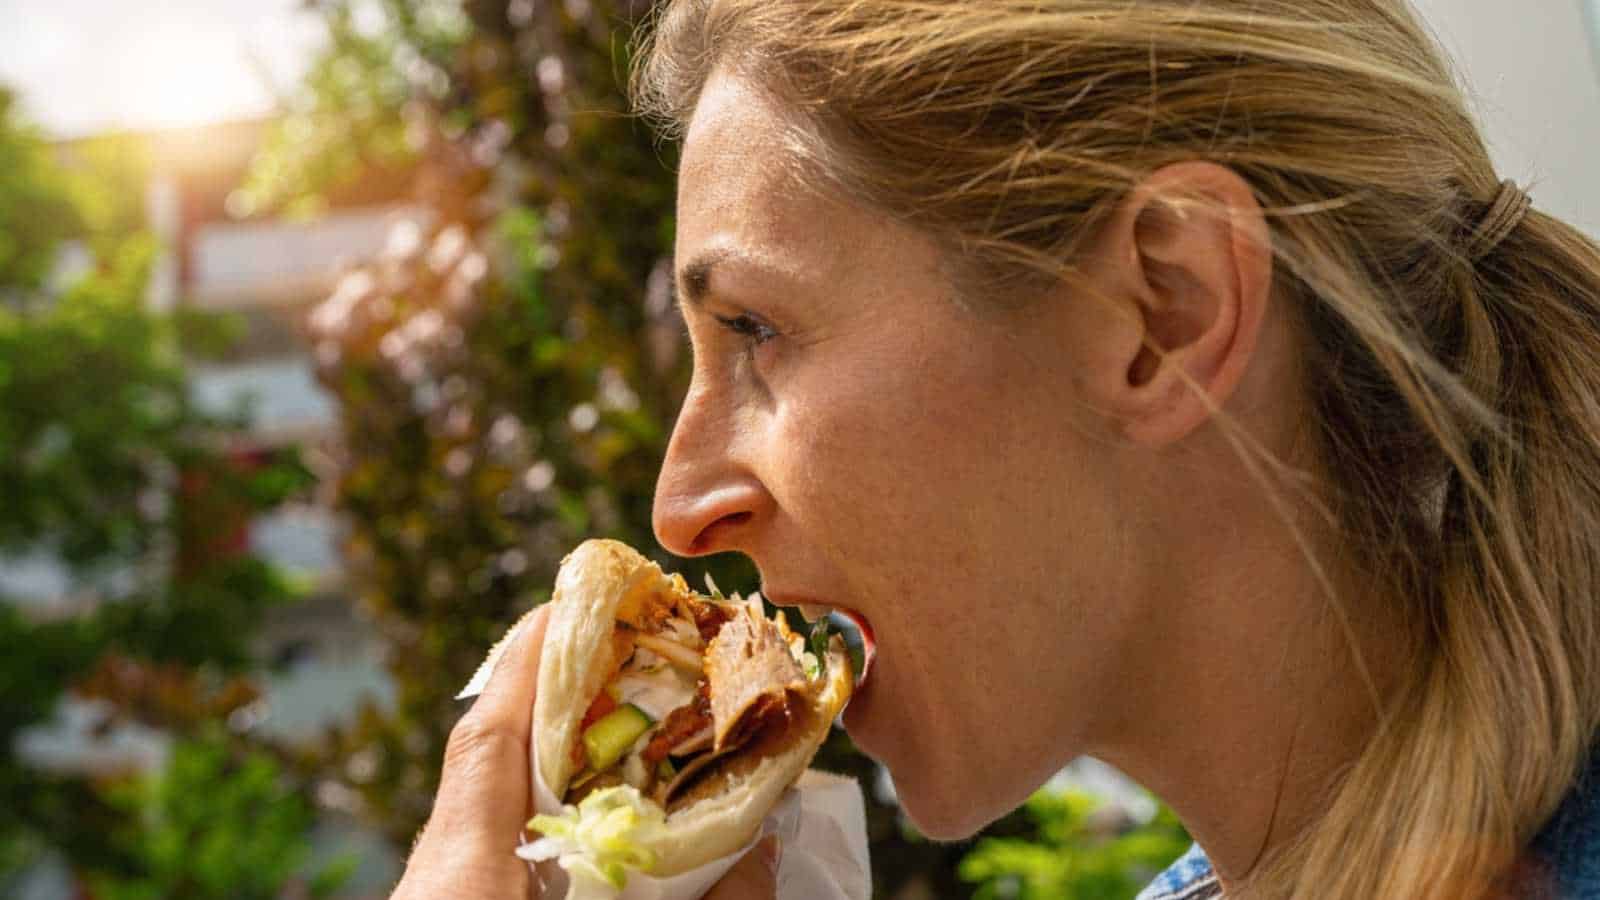 Woman eating sandwich